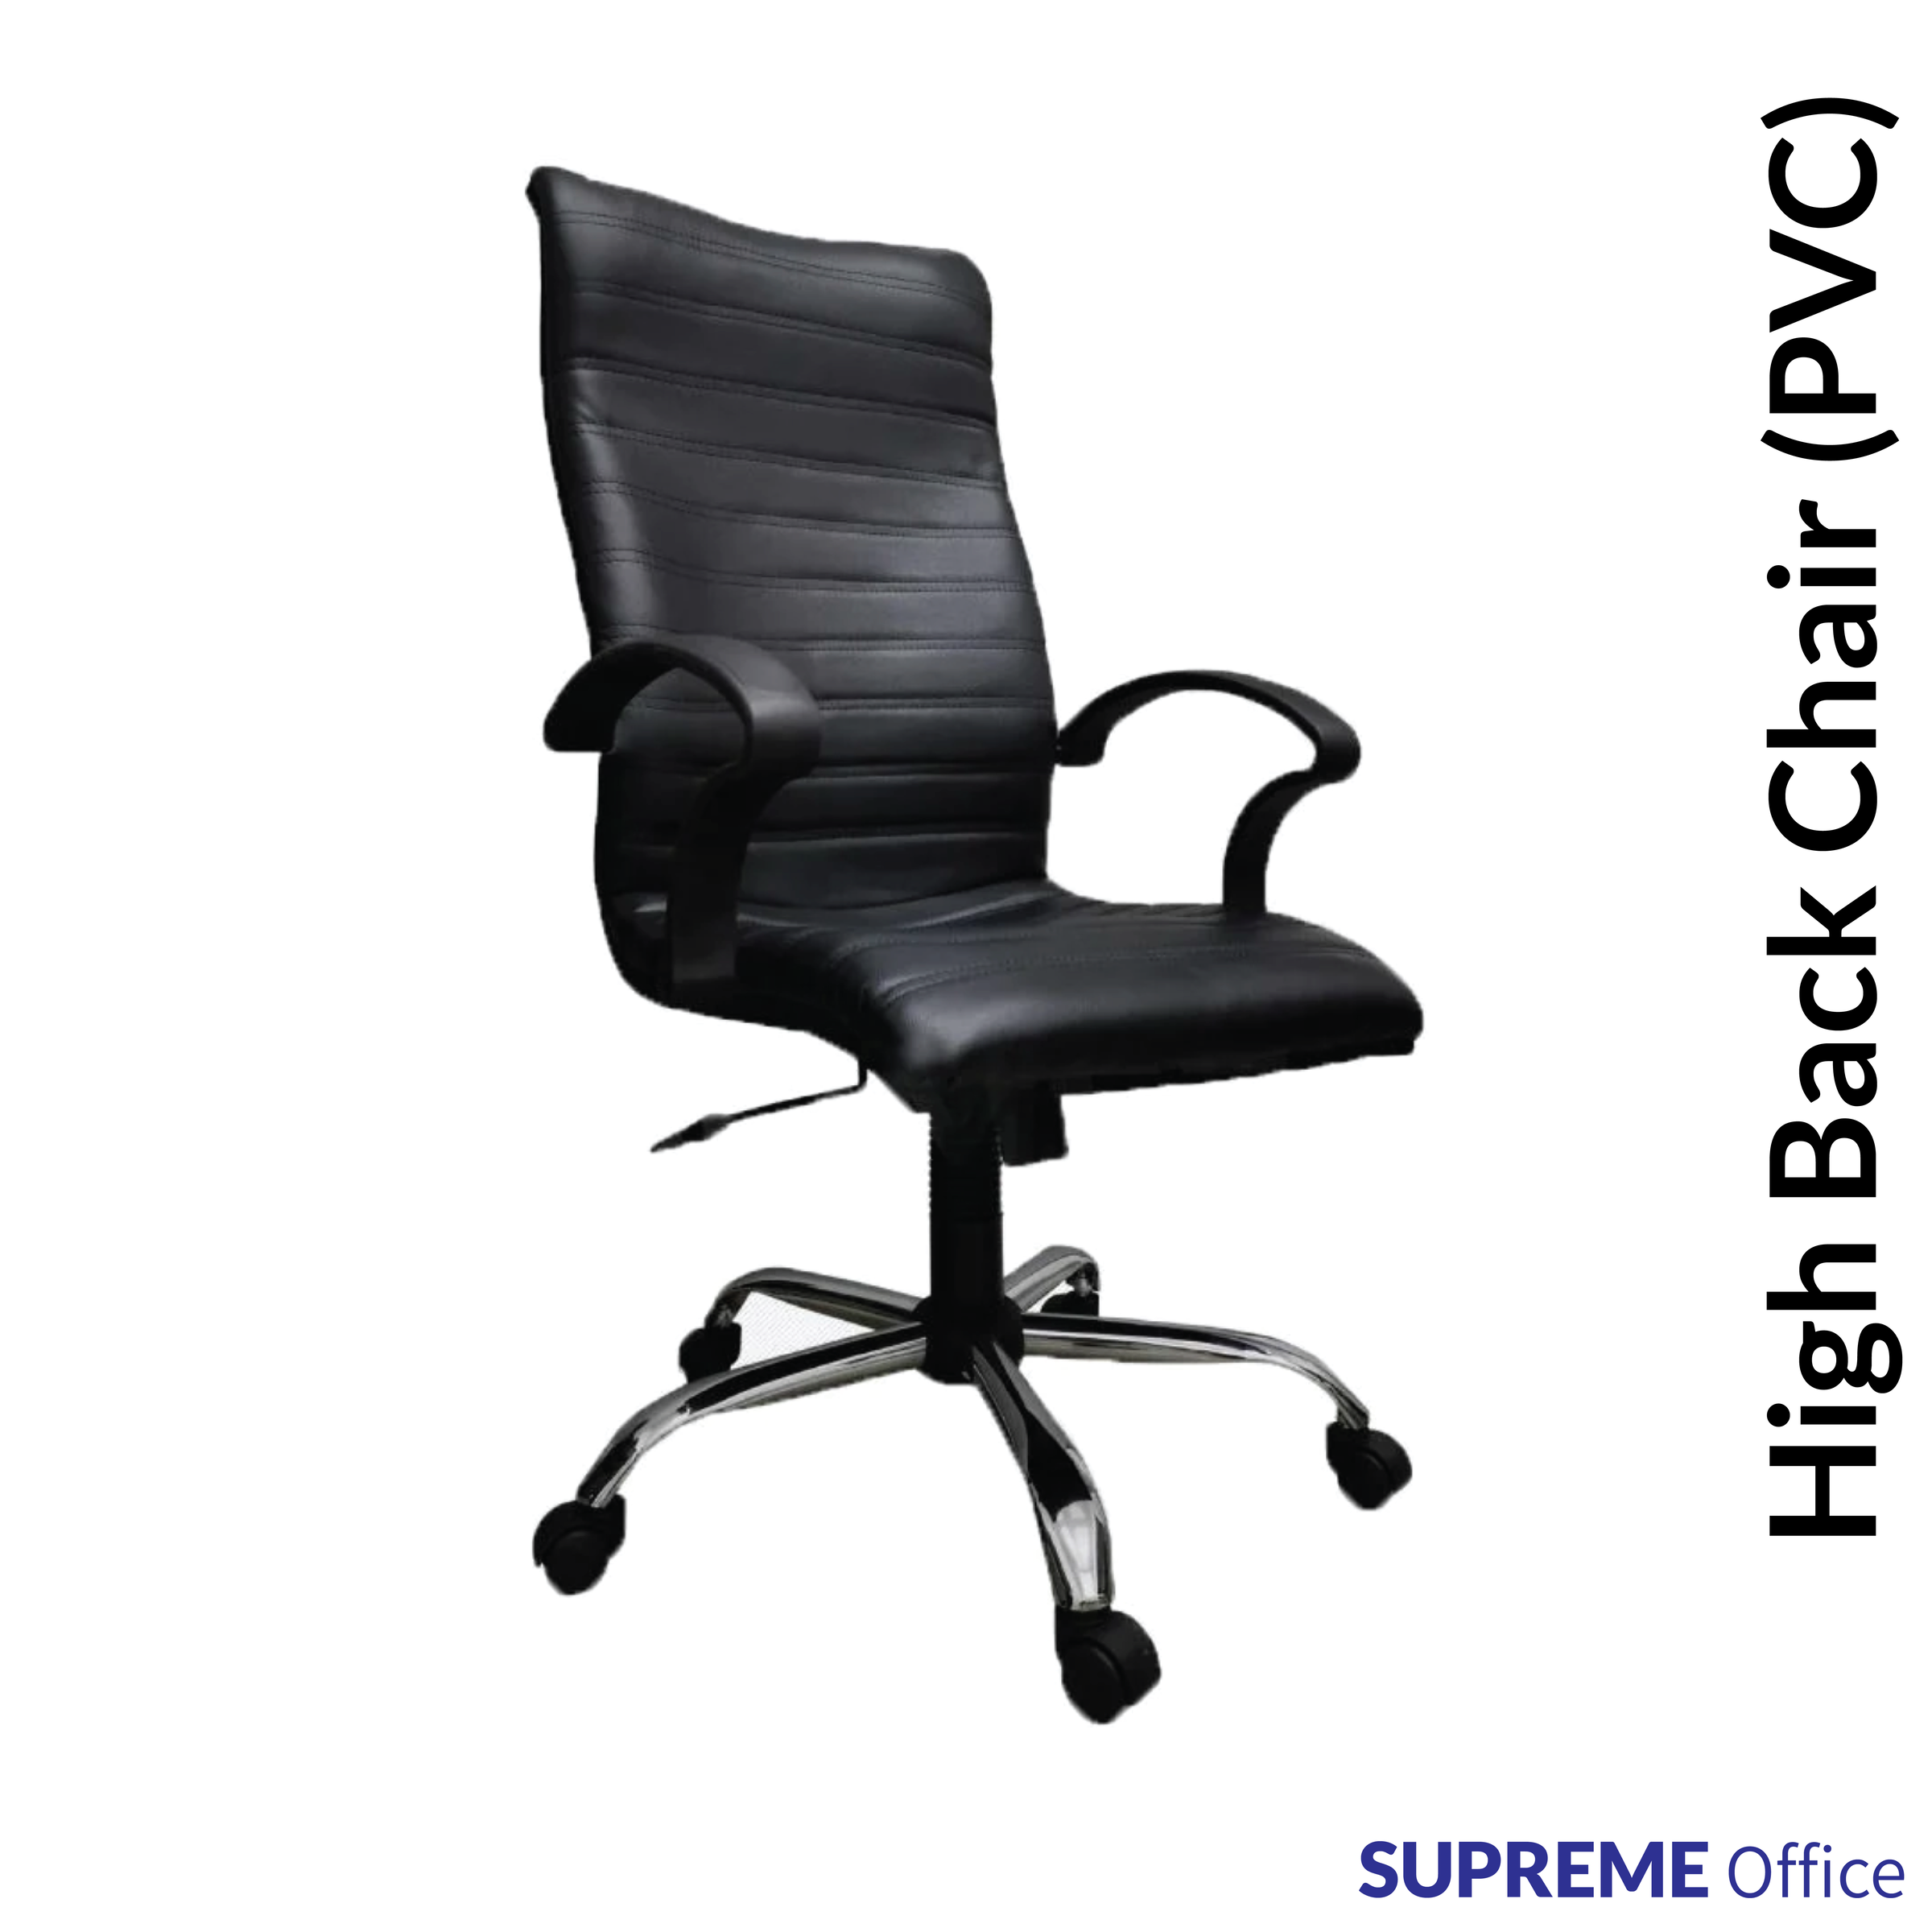 3v office chair-05